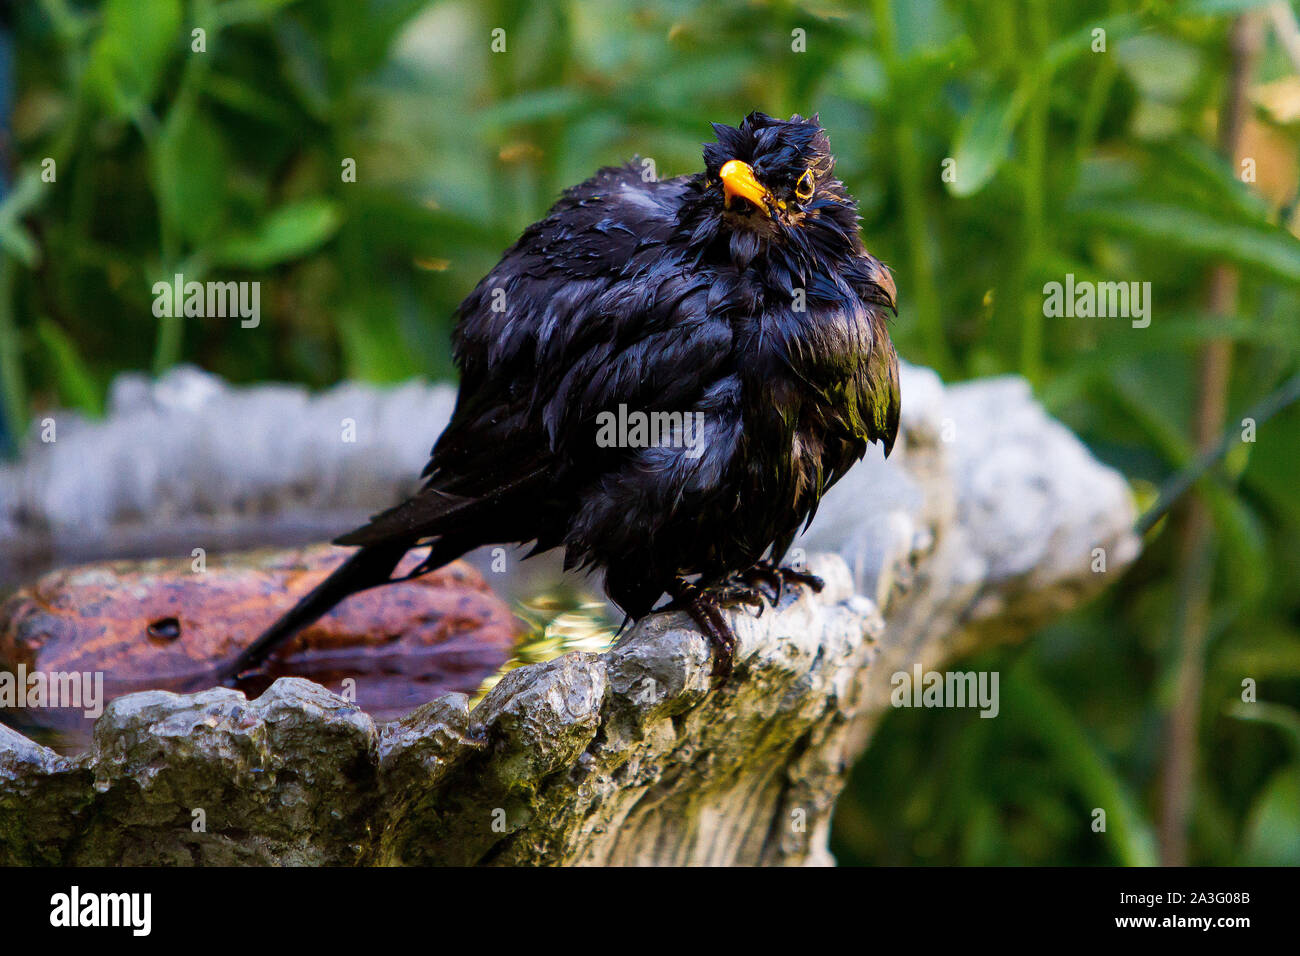 Blackbird after a bath in the birdbath Stock Photo